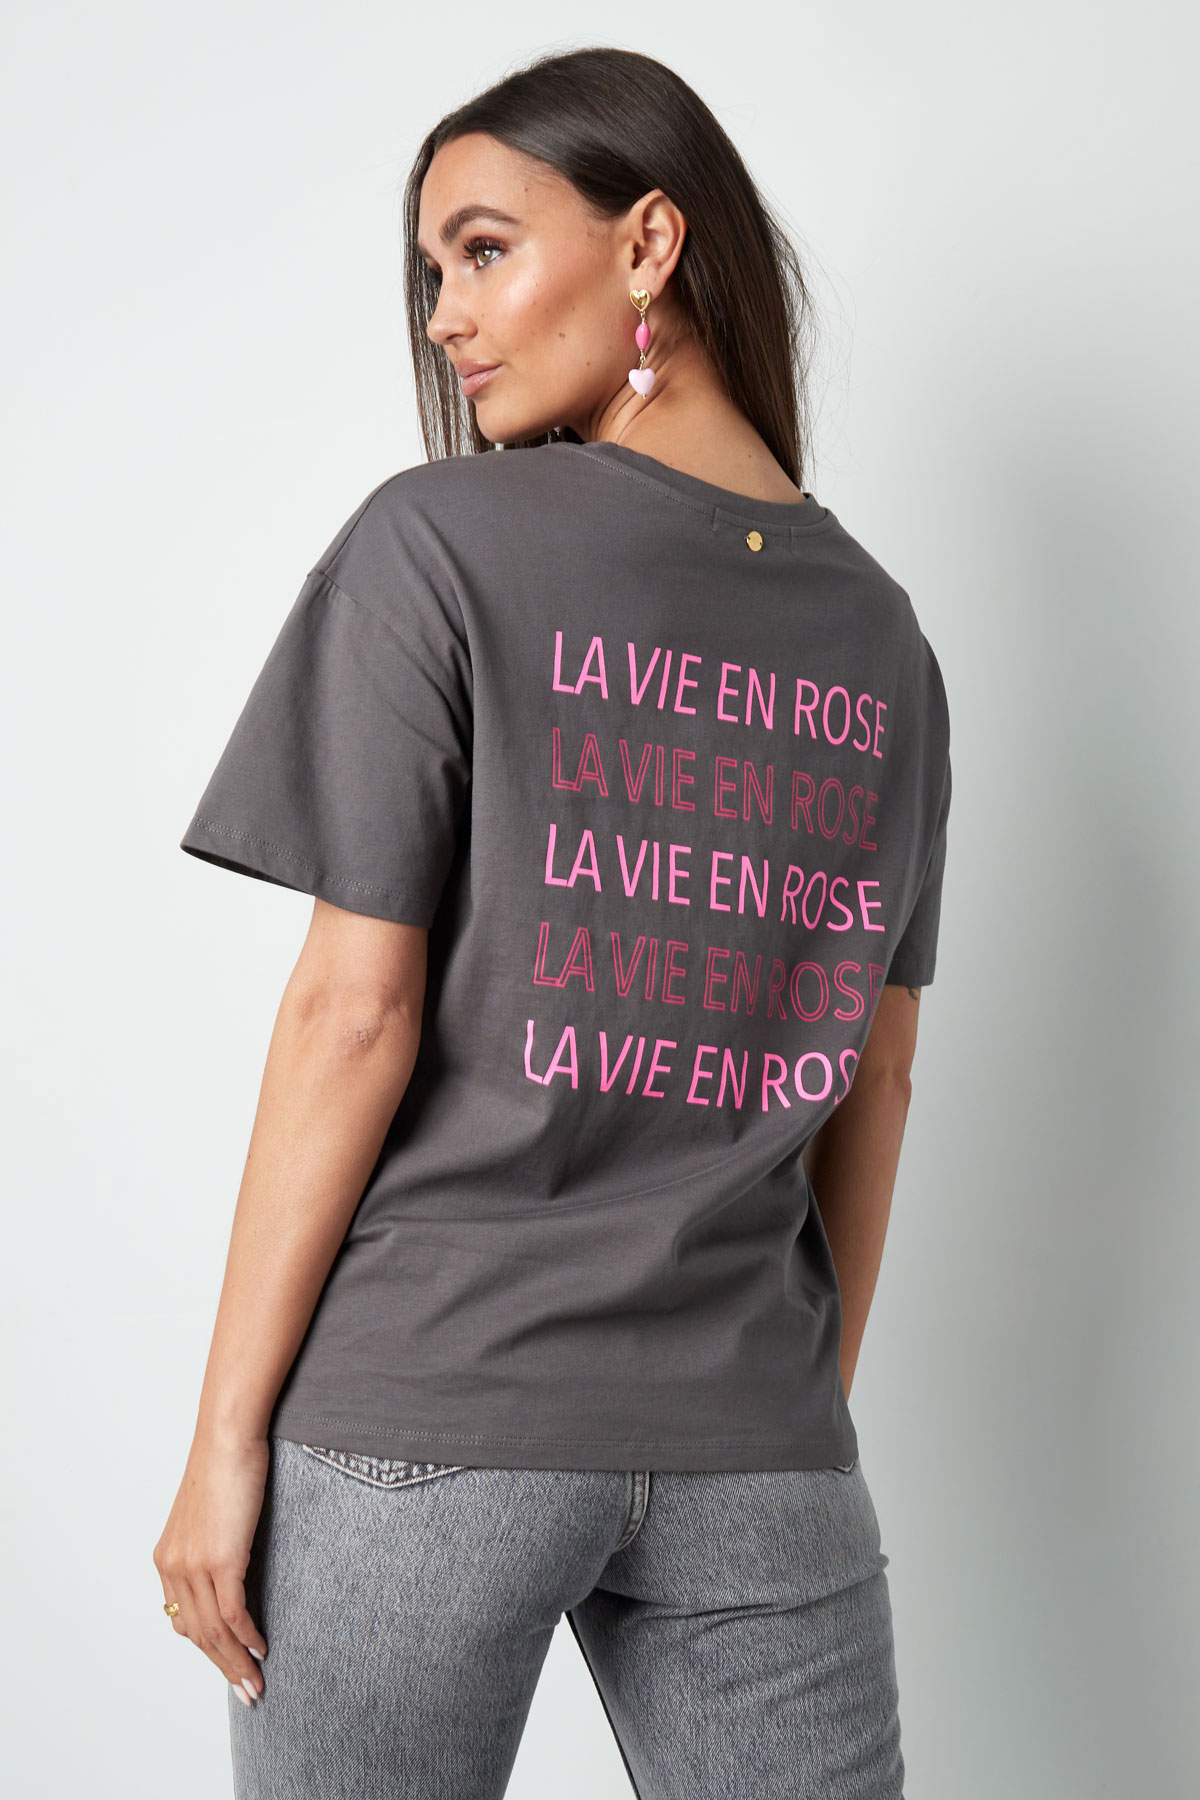 Camiseta la vie en rose - rosa h5 Imagen3